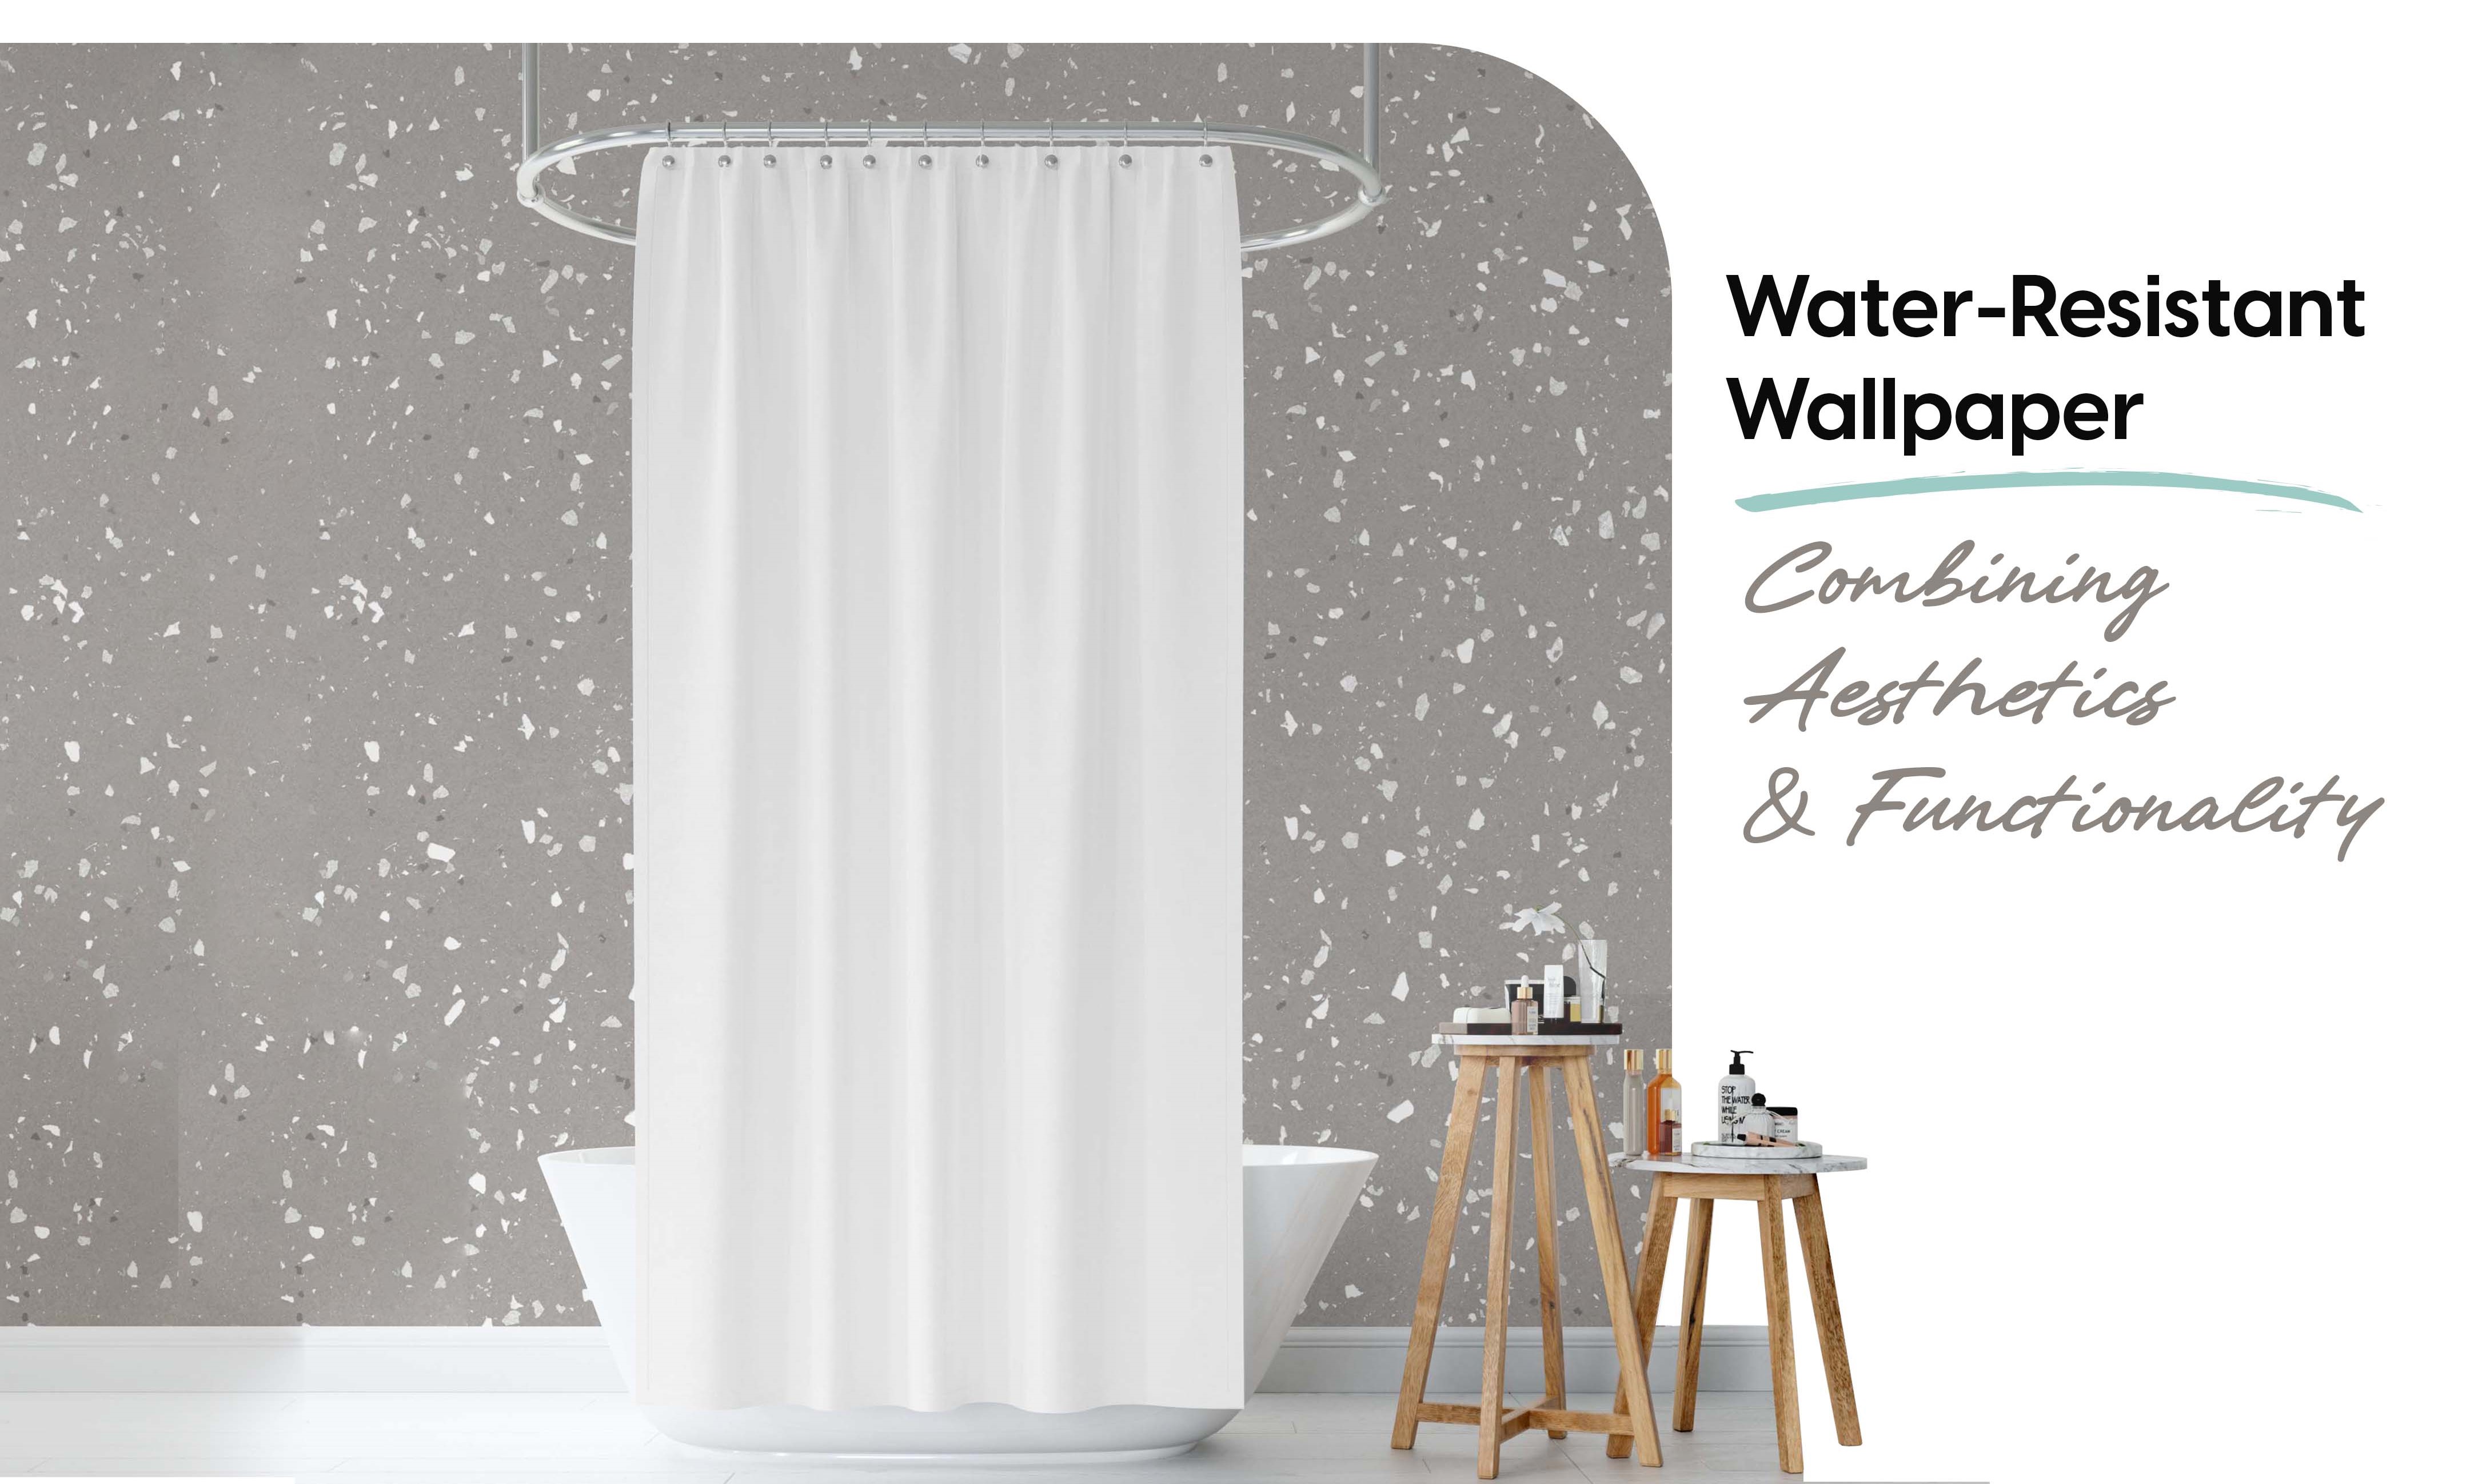 Water-Resistant Wallpaper